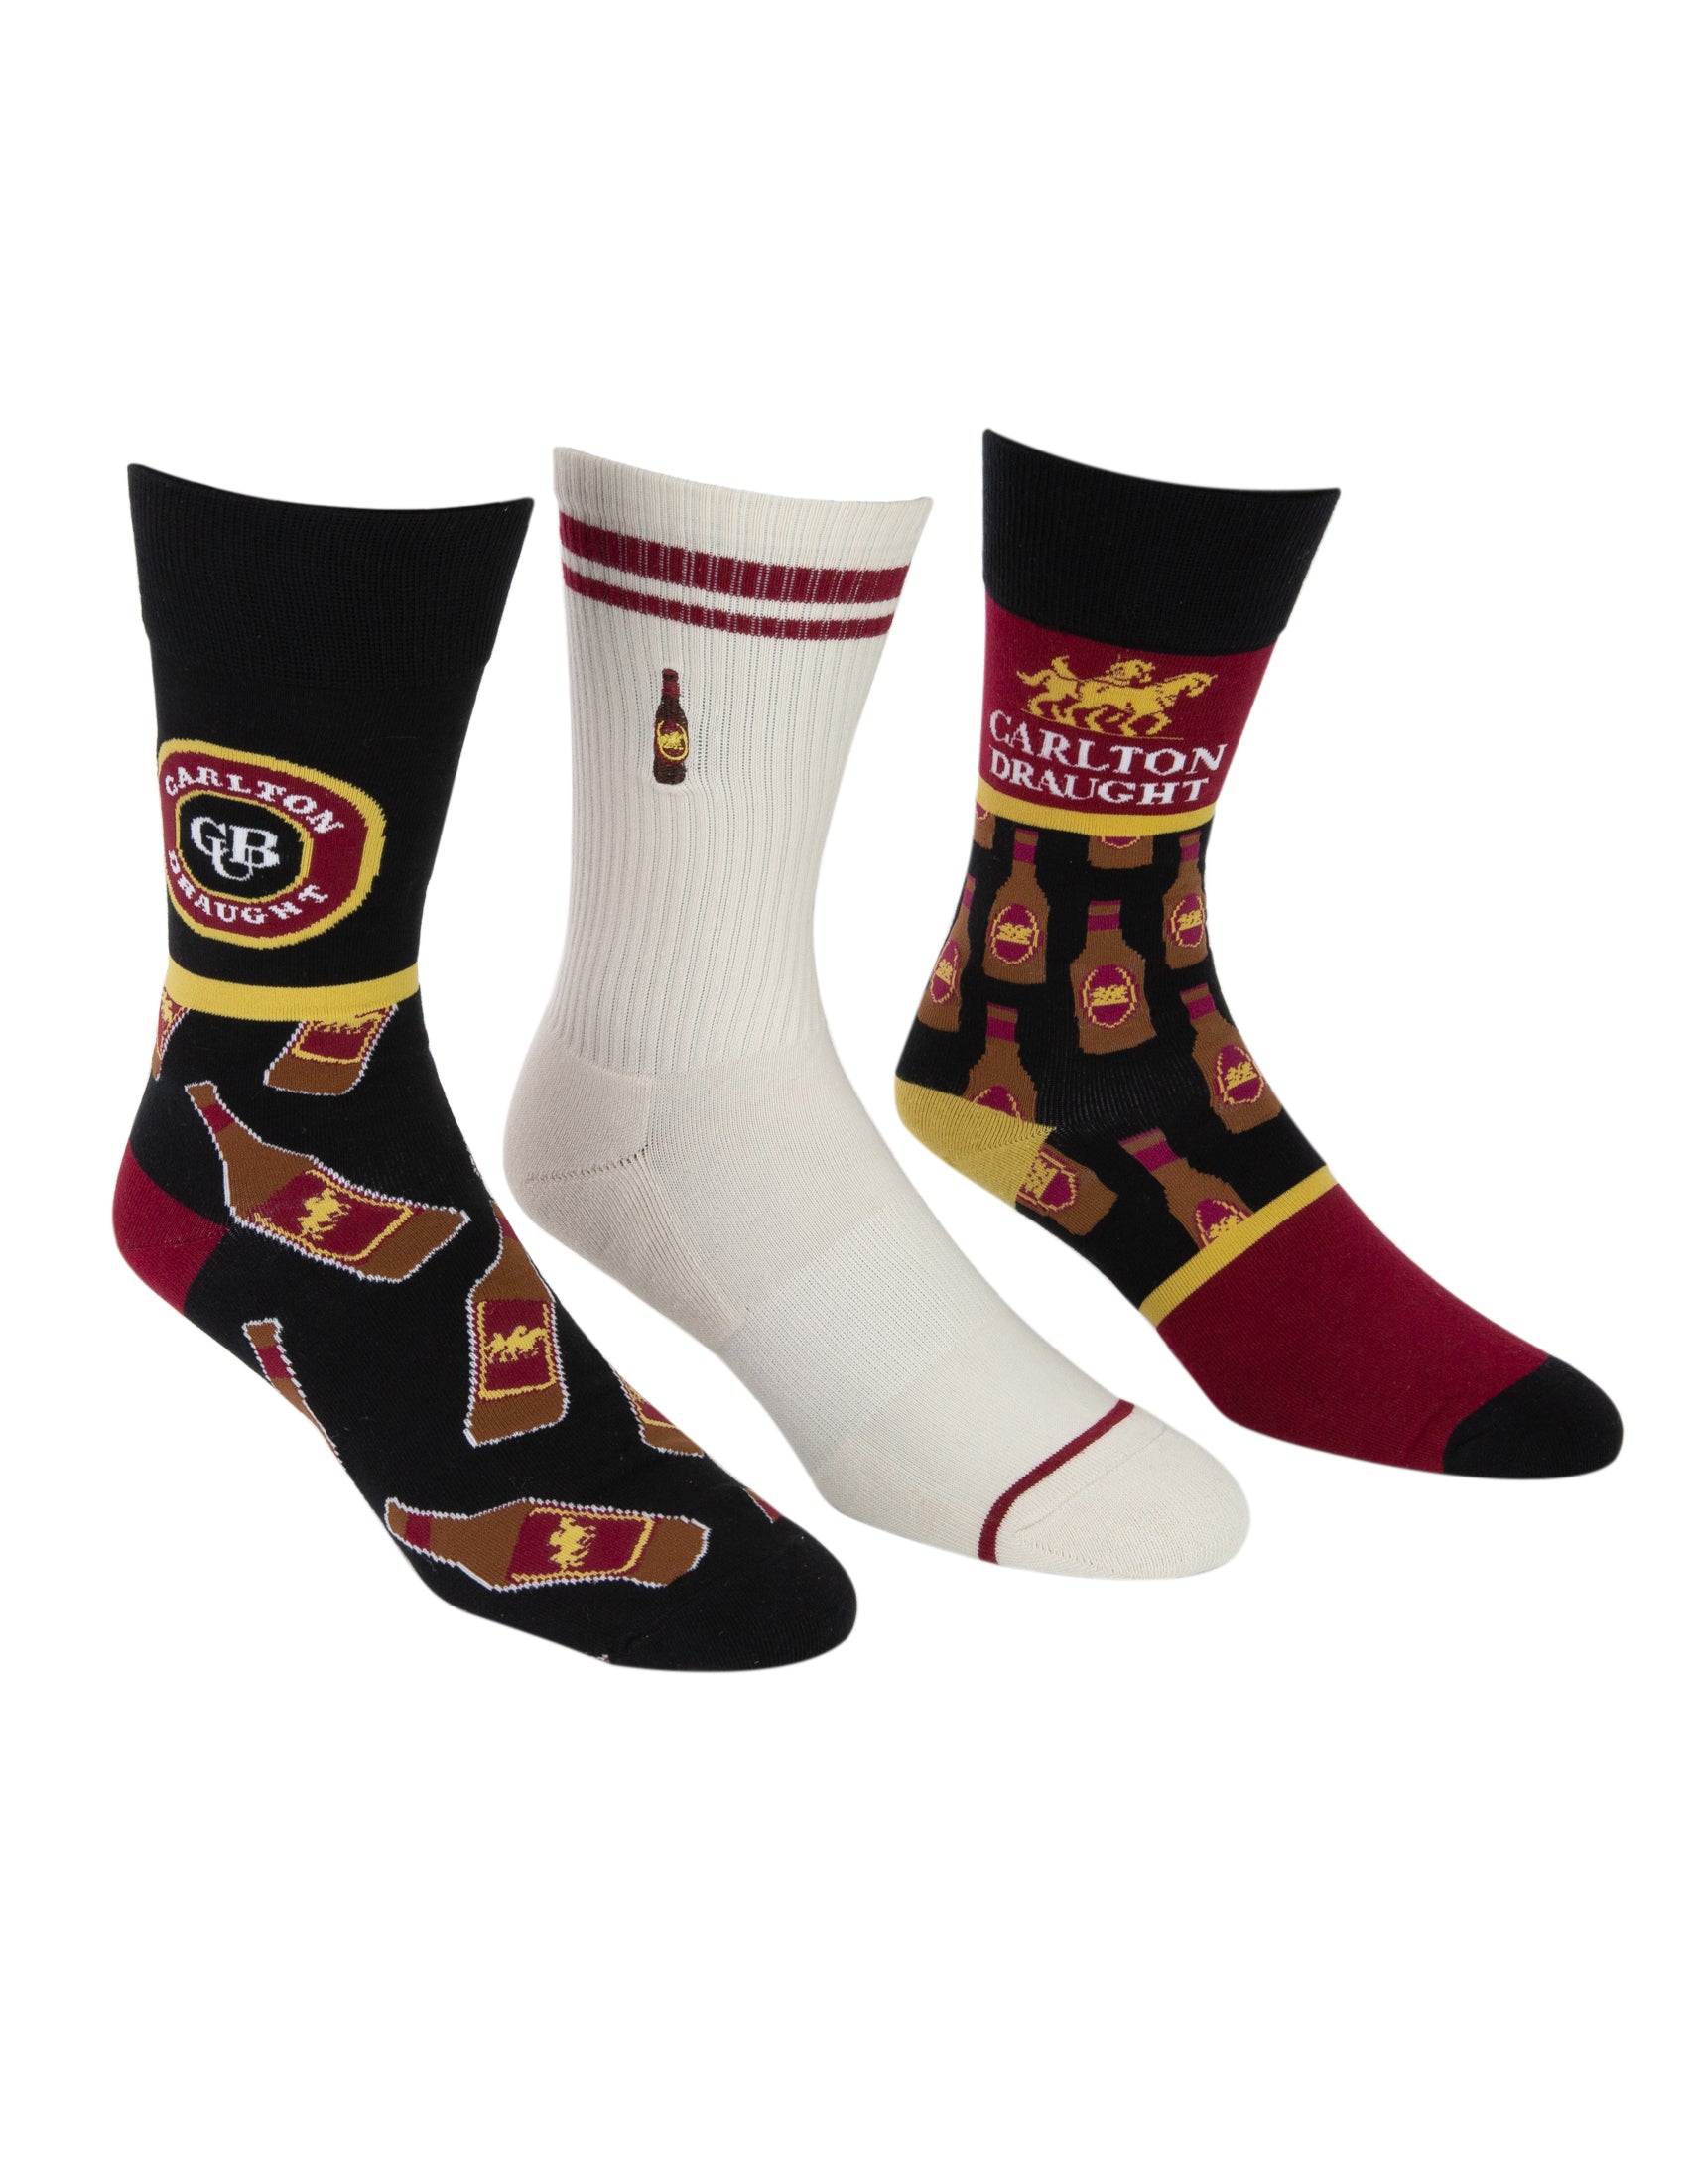 Carlton Draught Socks Combo 3 Pack